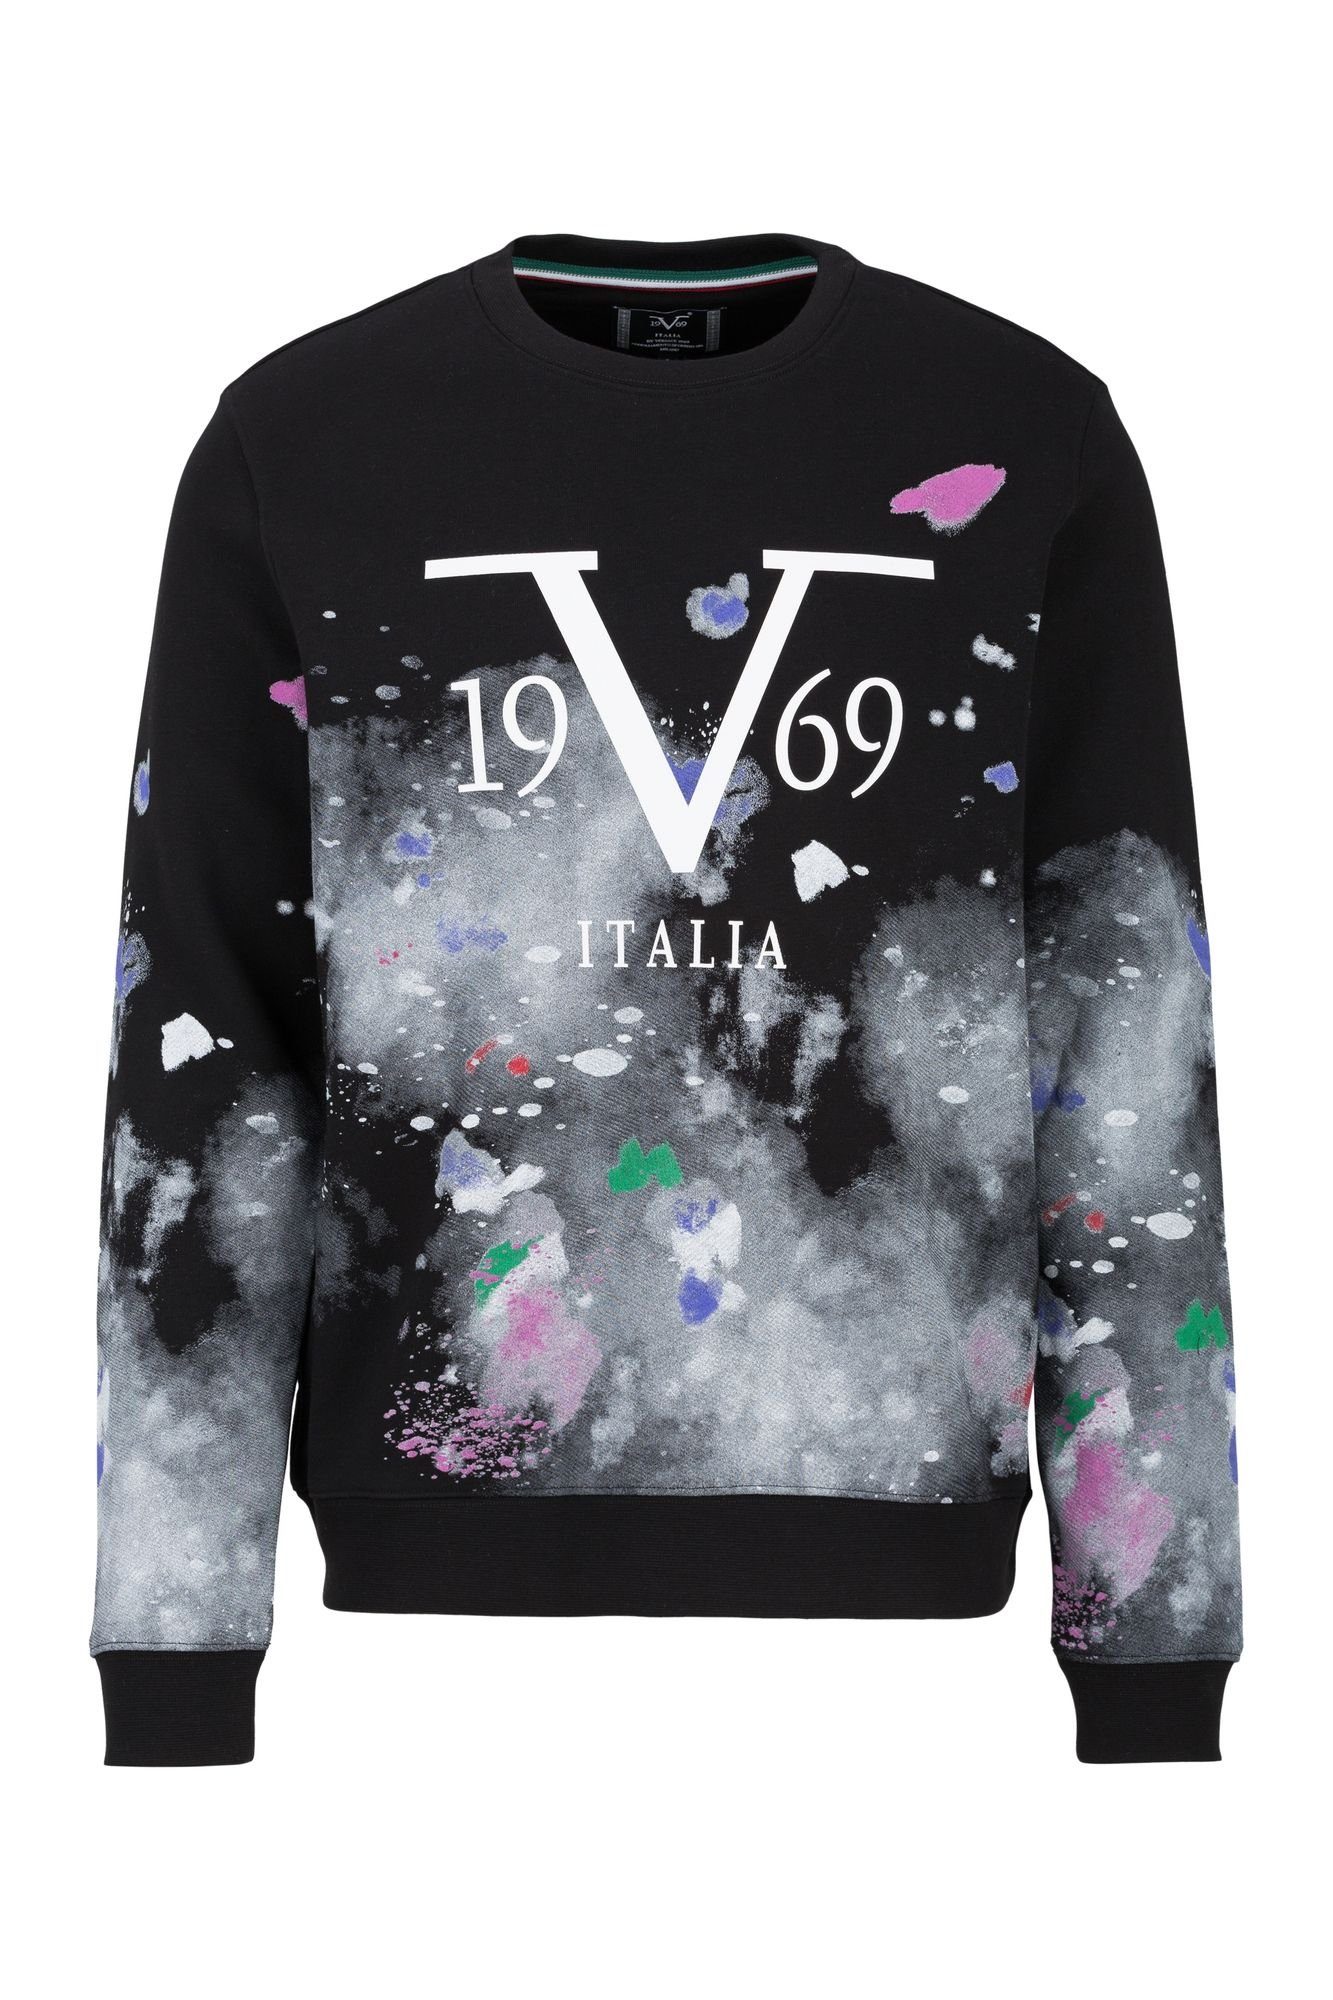 19V69 Italia by Versace Sweatshirt by Versace Luan Sportivo SRL 